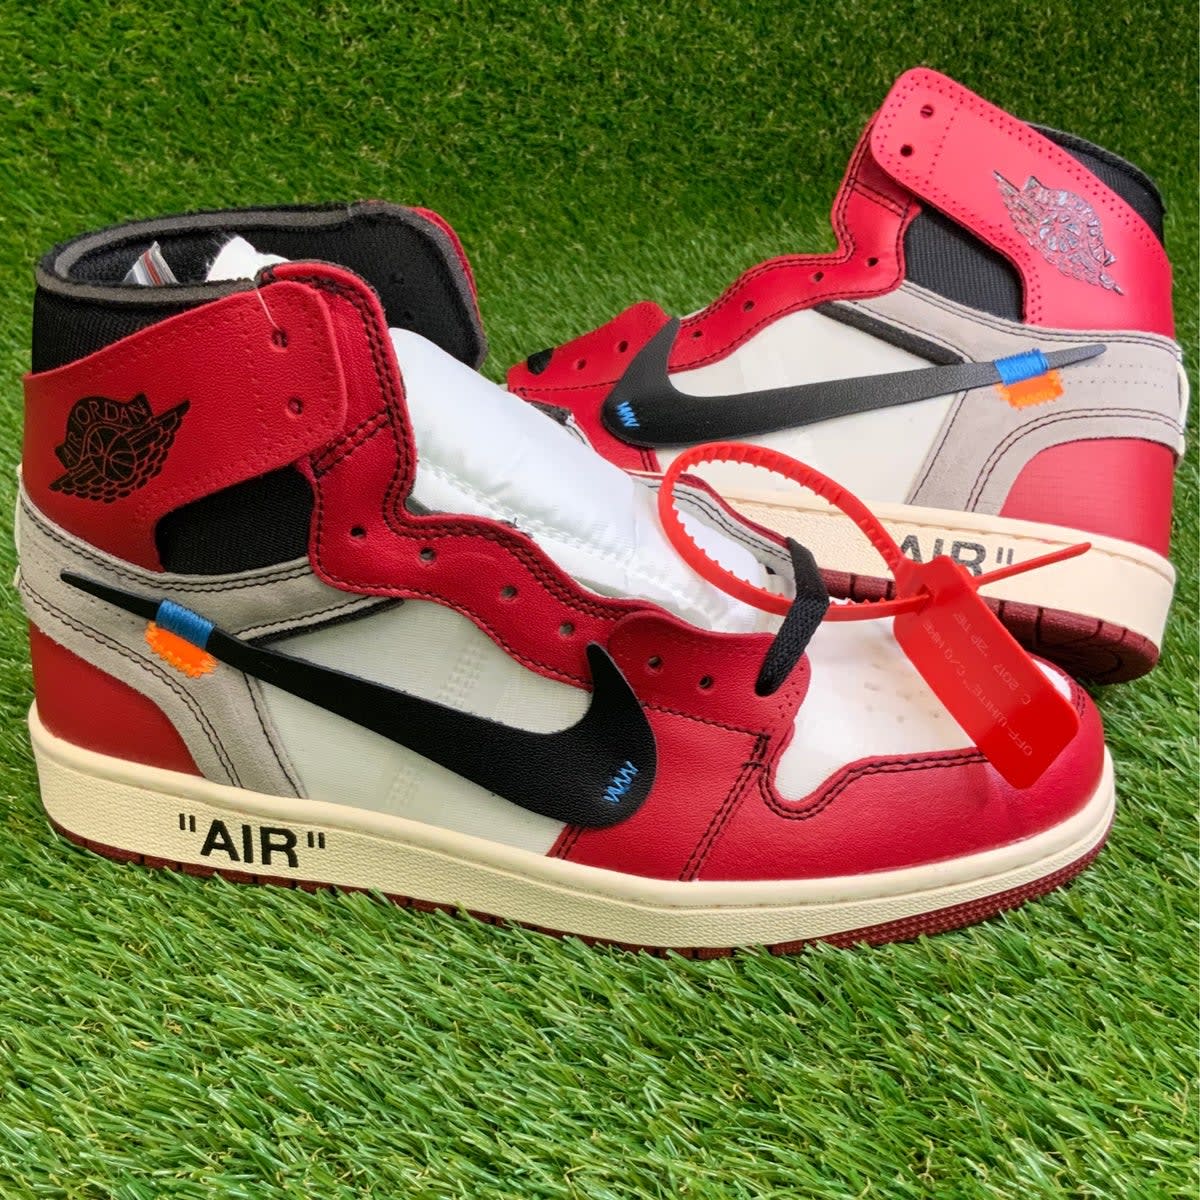 Off White Air Jordan 1 “Chicago” - Sneakers - Timeless Kicks